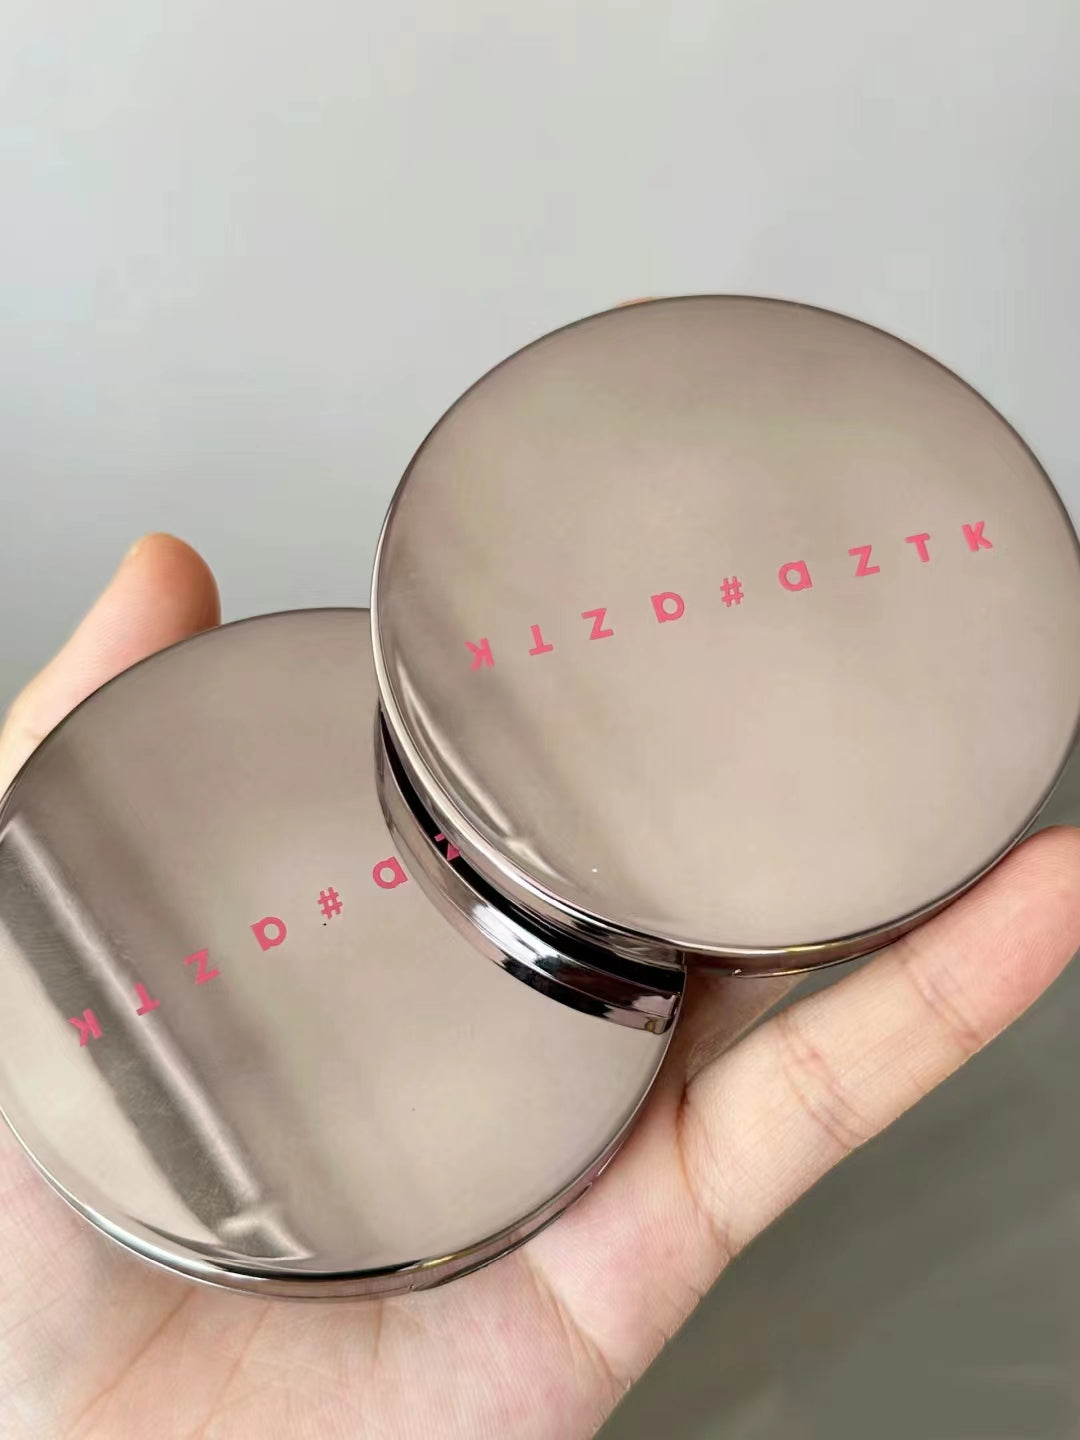 AZTK Fresh Skin Natural Filter Powder Upgrade AZTK清爽贴肤自然滤镜蜜粉饼升级版